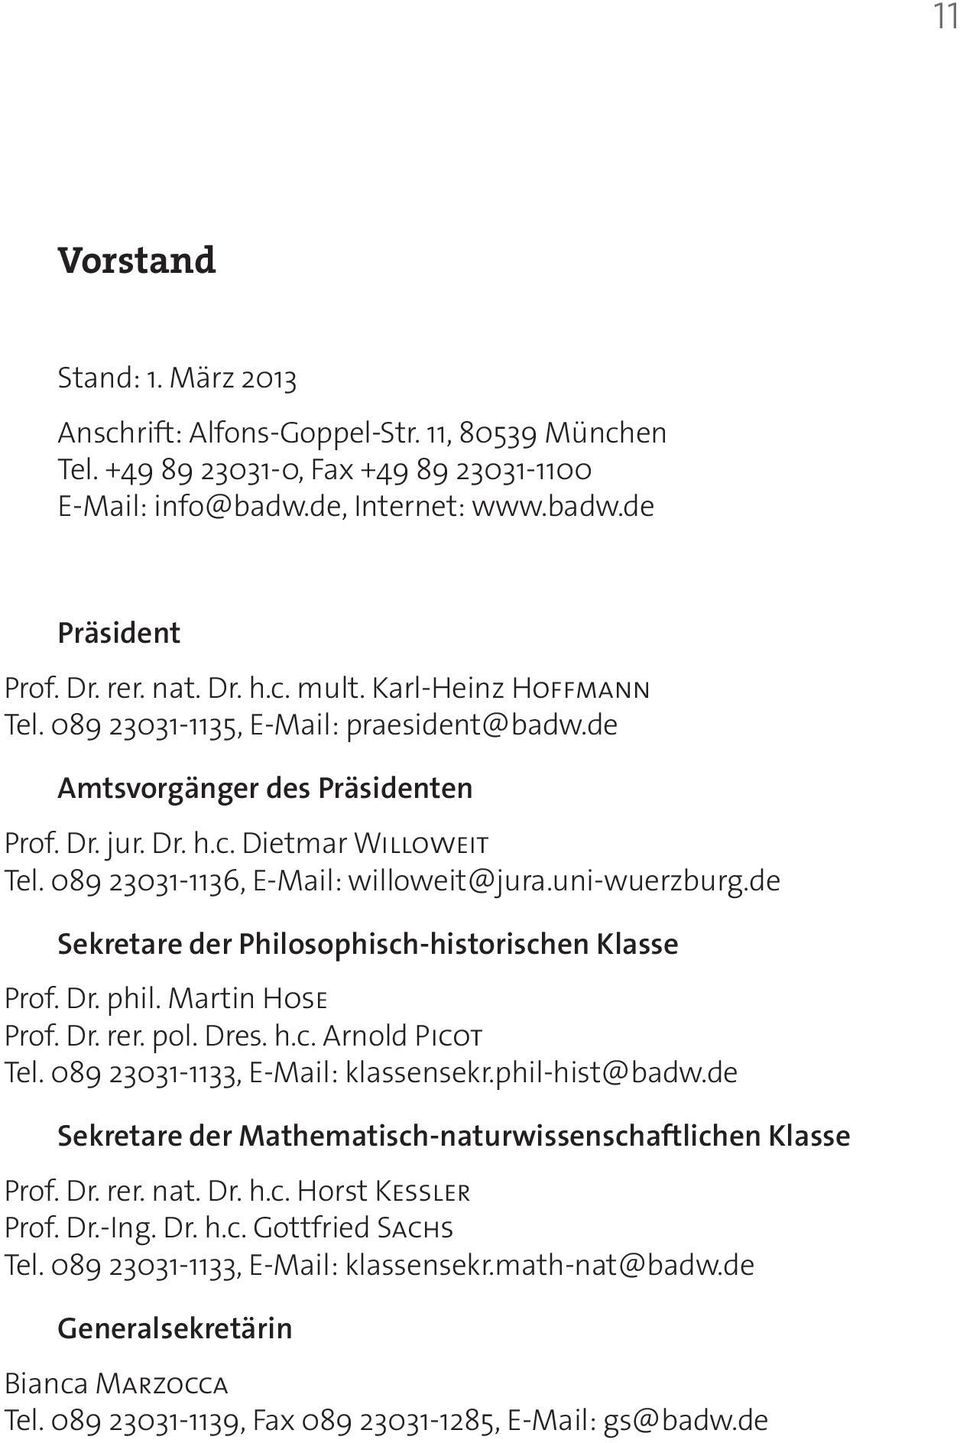 uni-wuerzburg.de Sekretare der Philosophisch-historischen Klasse Prof. Dr. phil. Martin Hose Prof. Dr. rer. pol. Dres. h.c. Arnold Picot Tel. 089 23031-1133, E-Mail: klassensekr.phil-hist@badw.